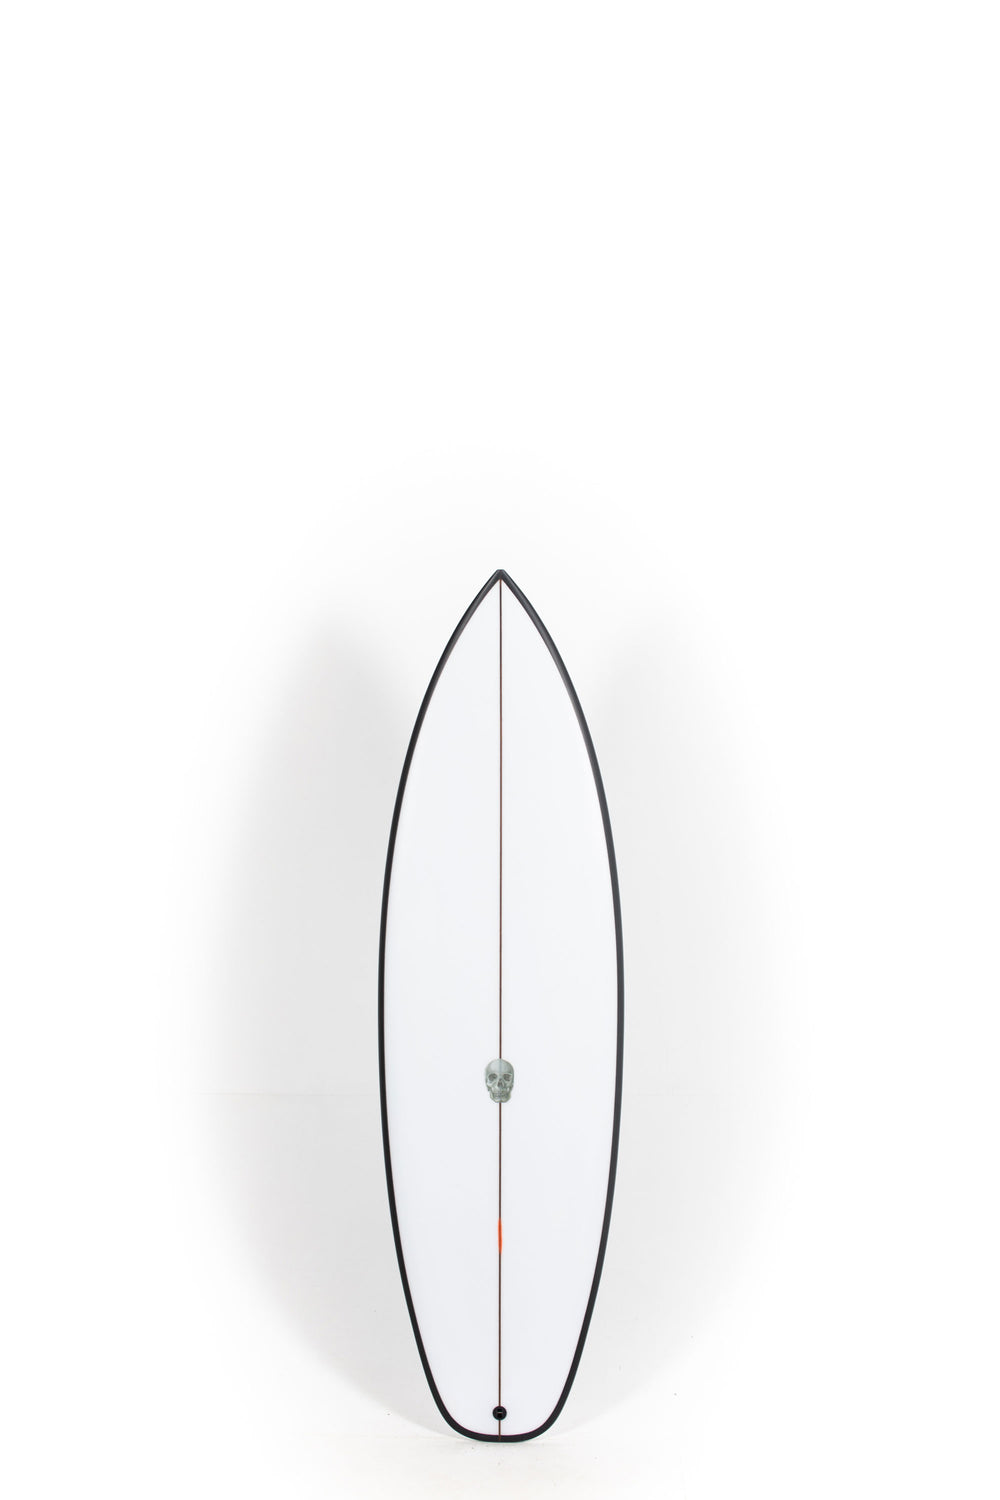 Pukas Surf Shop - Christenson Surfboards - OP1 - 5'6